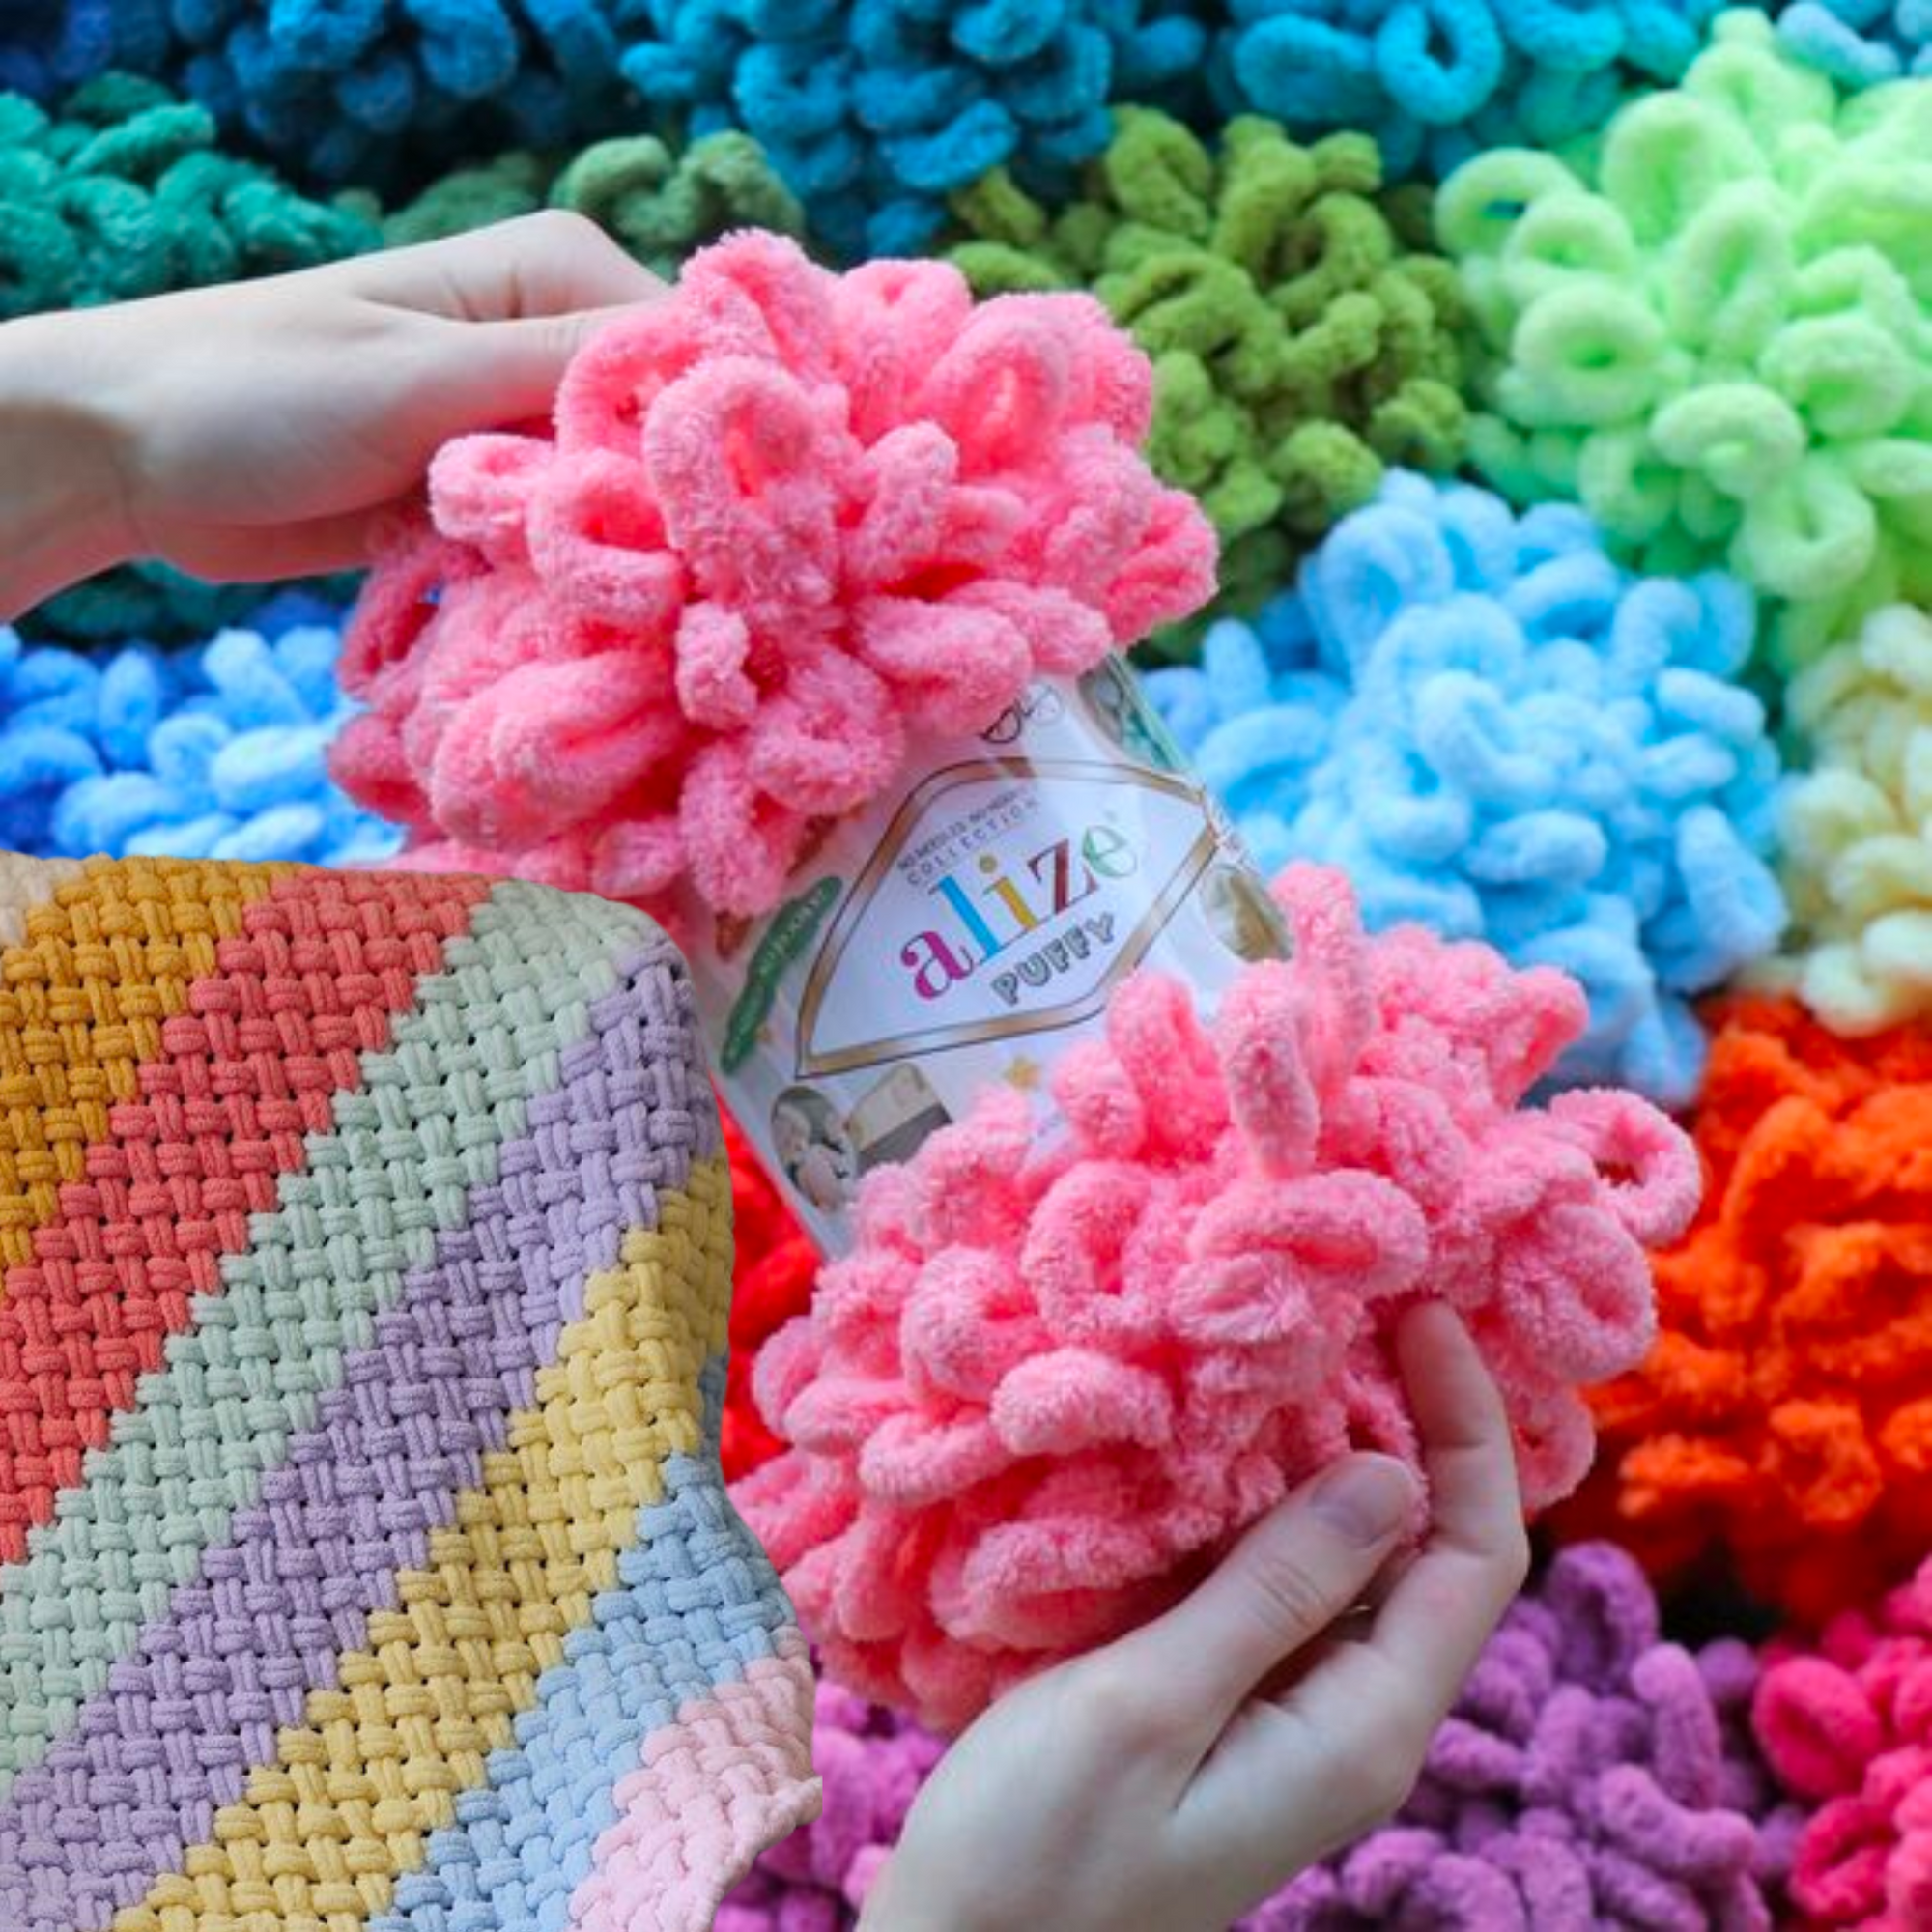 Alize Puffy Micro Poly Yarn 100g, Vanilla - 742